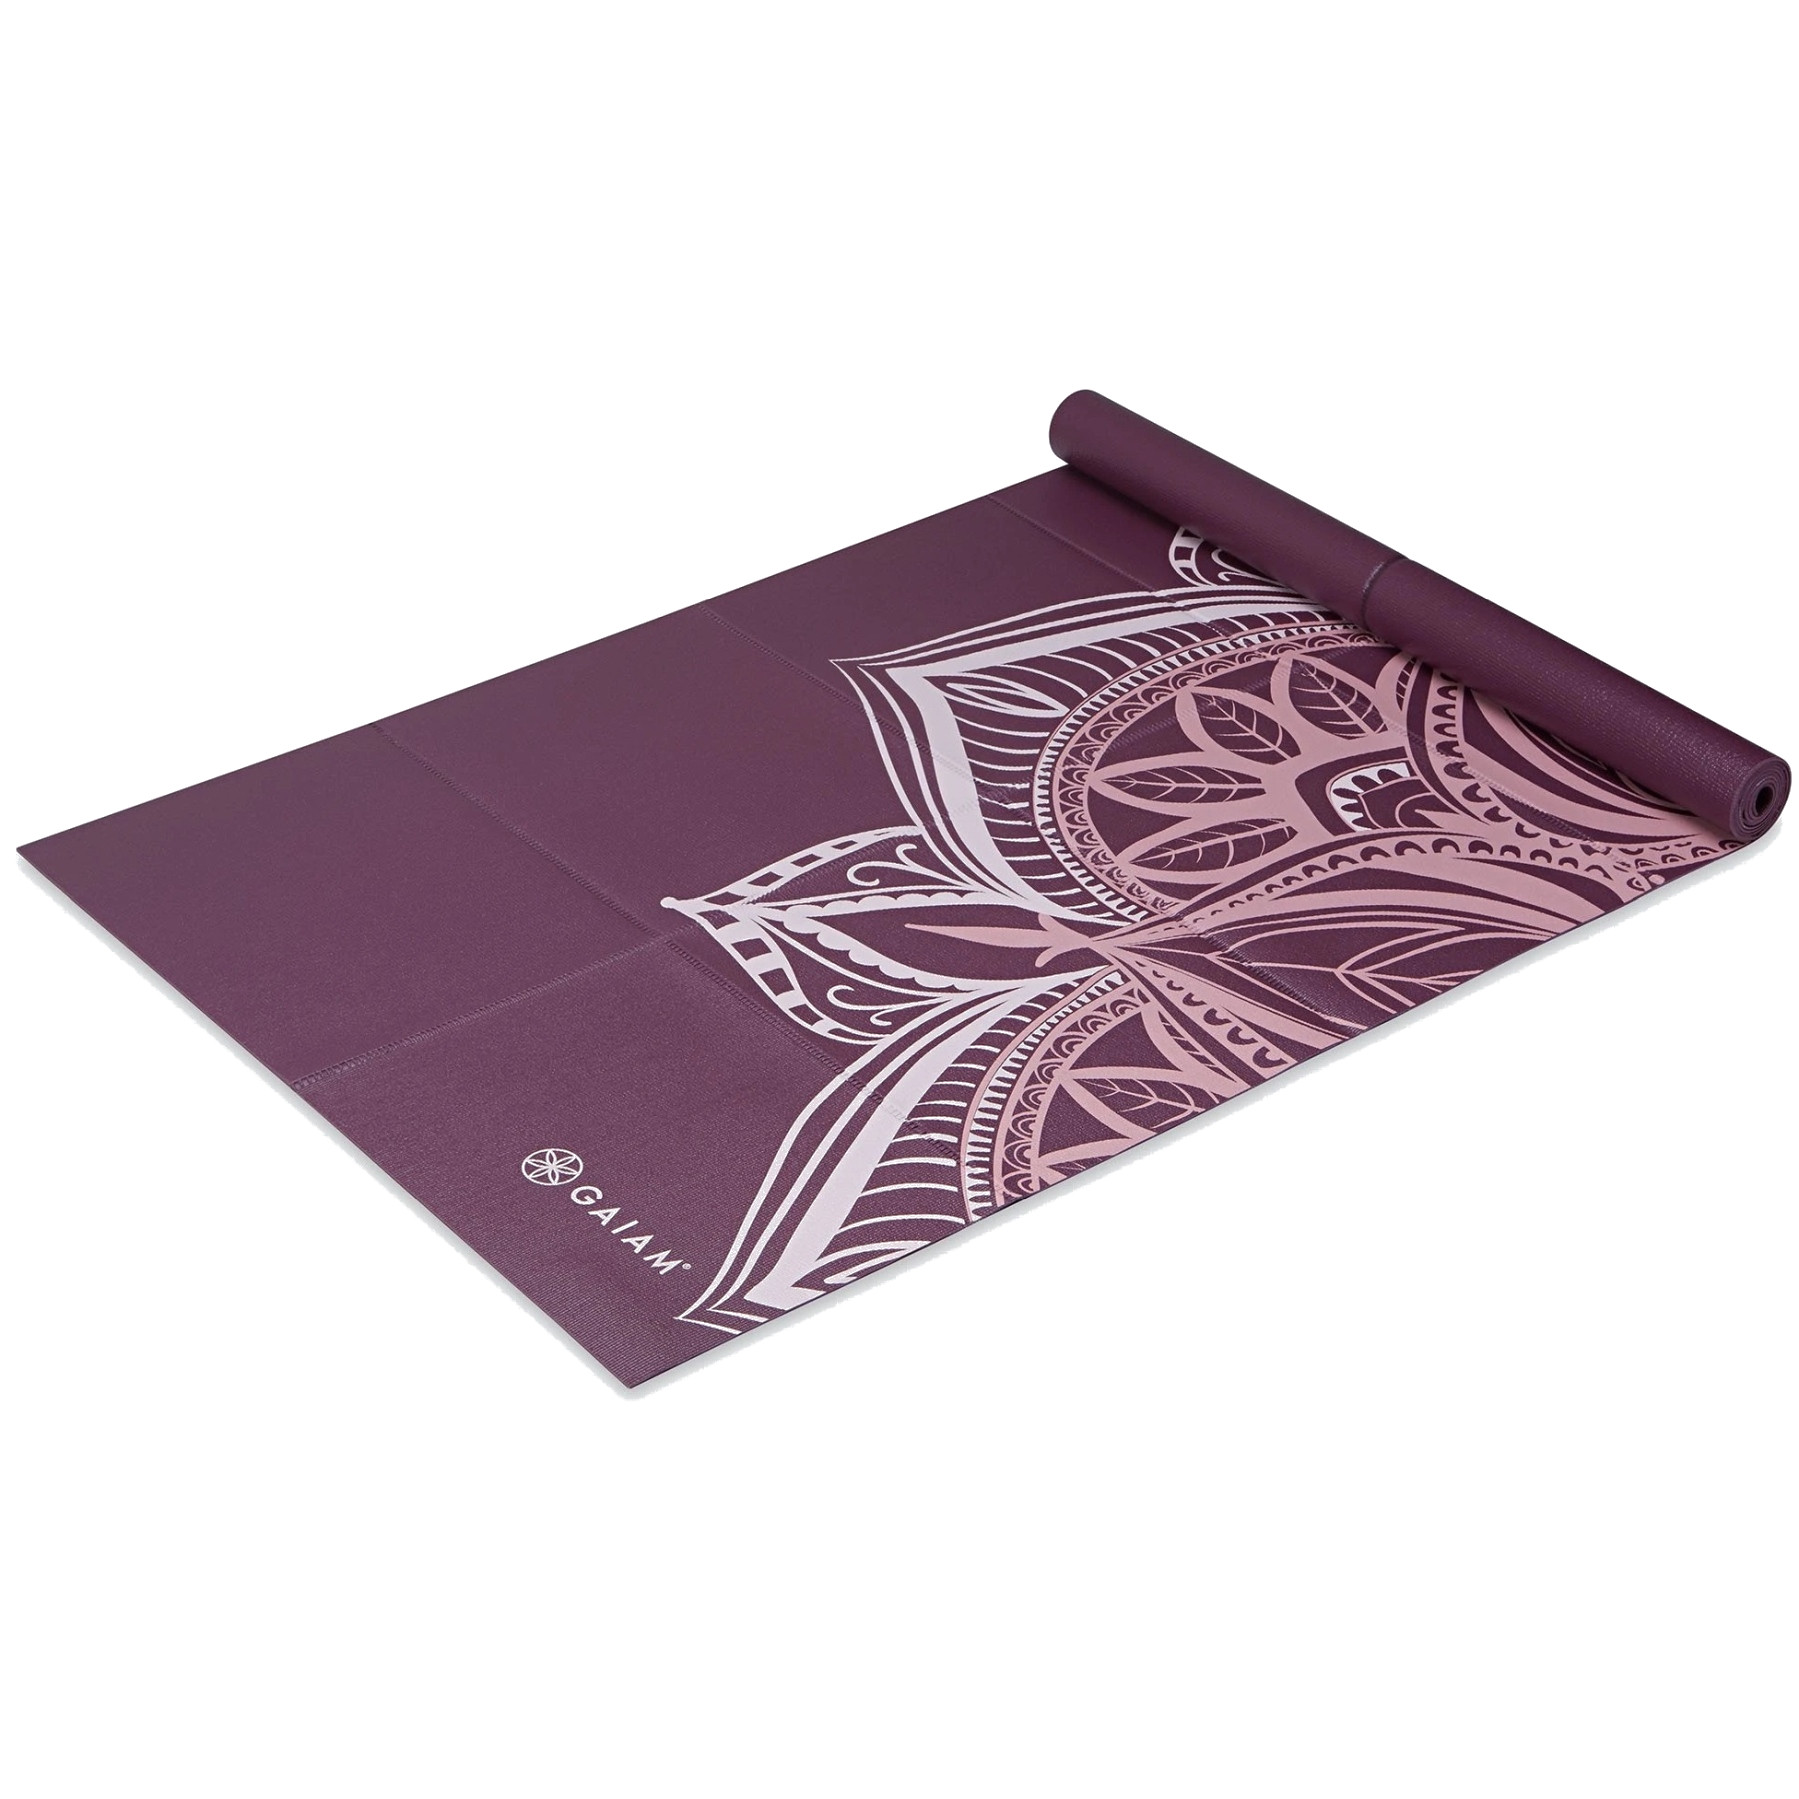 Productfoto van Gaiam Foldable Yoga Mat (2mm) - Cranberry